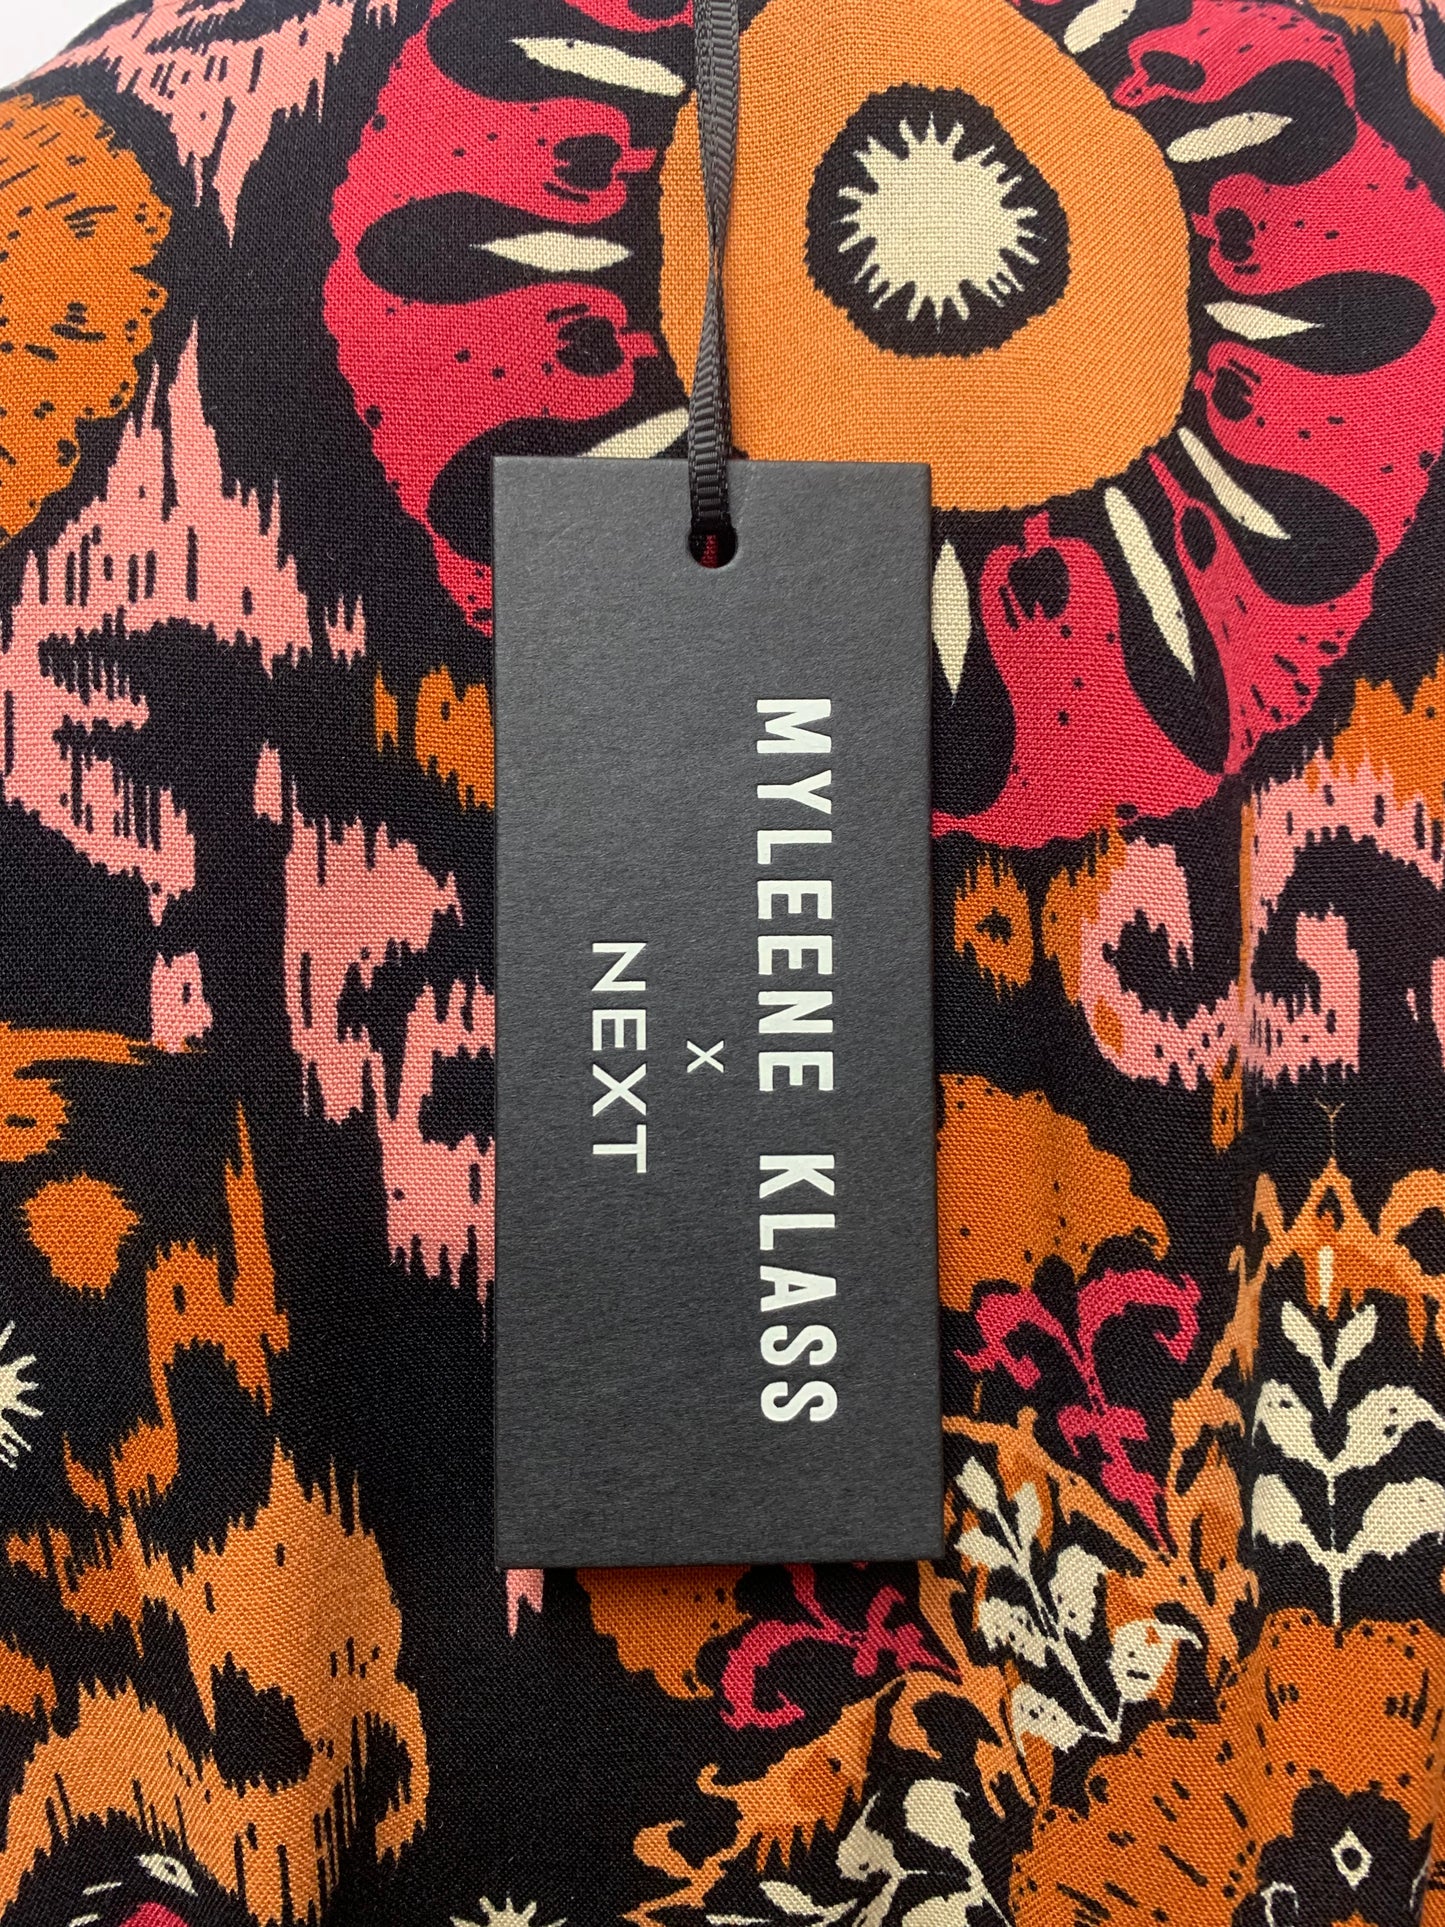 Myleene Klass x Next Orange, Black and Red Multi Floral Mix Maxi Dress 12 BNWT